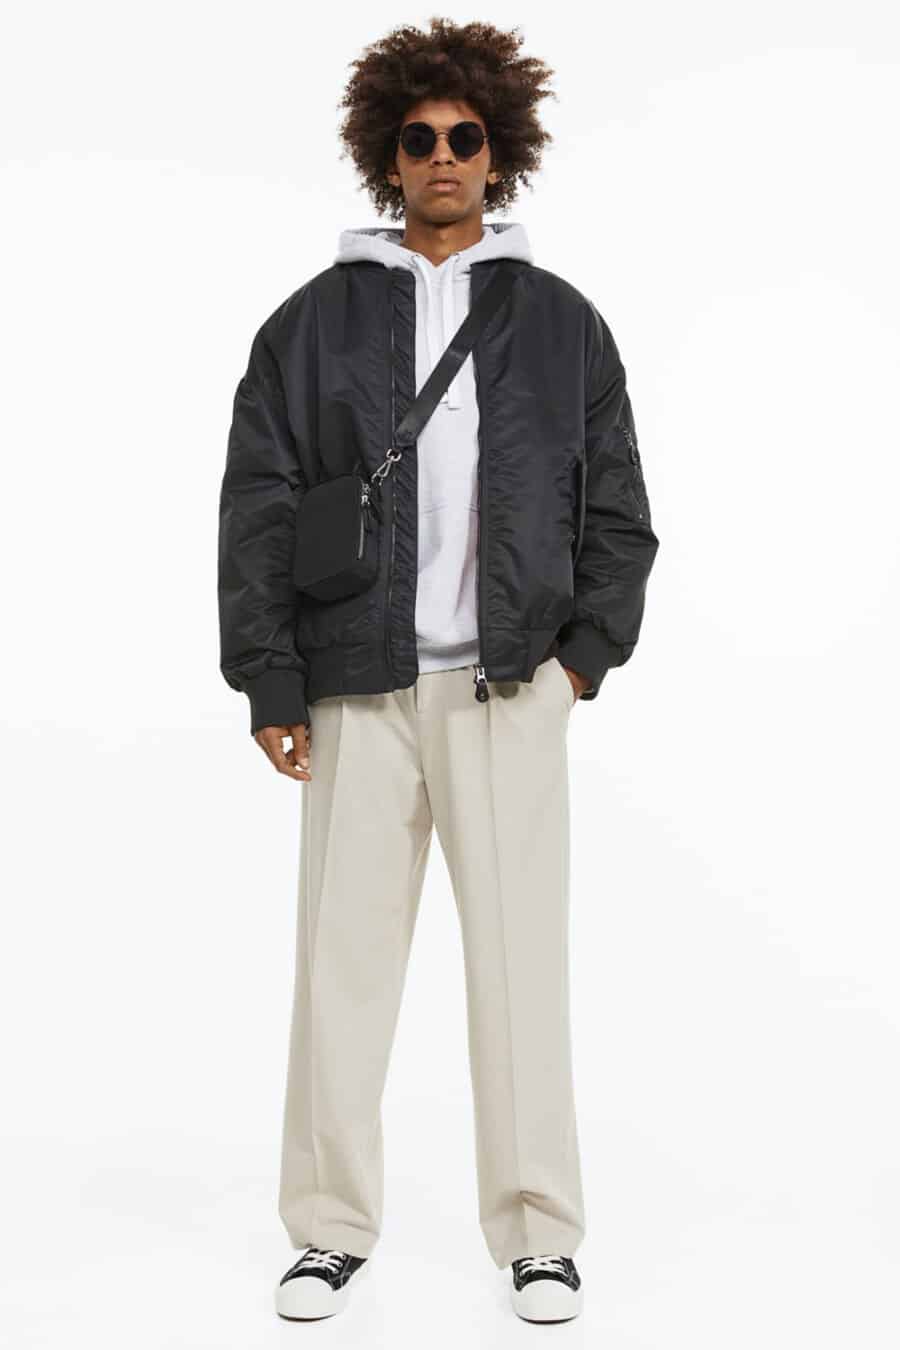 Men's loose off-white pants, grey hoodie, black drop shoulder bomber jacket, black crossbody bag and black canvas sneakers outfit